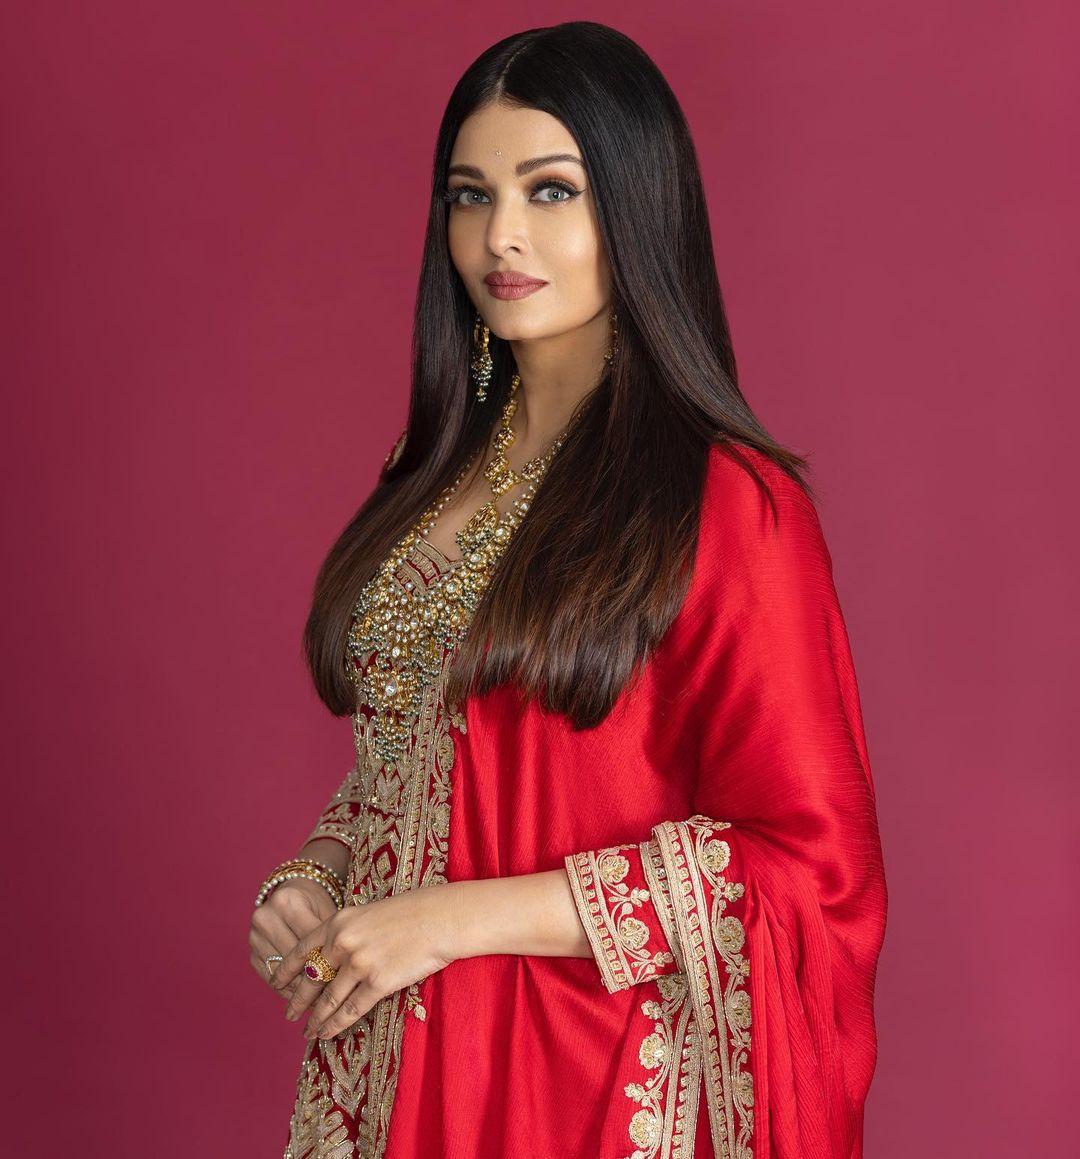 Aishwarya looked stunning in a crimson anarkali gown